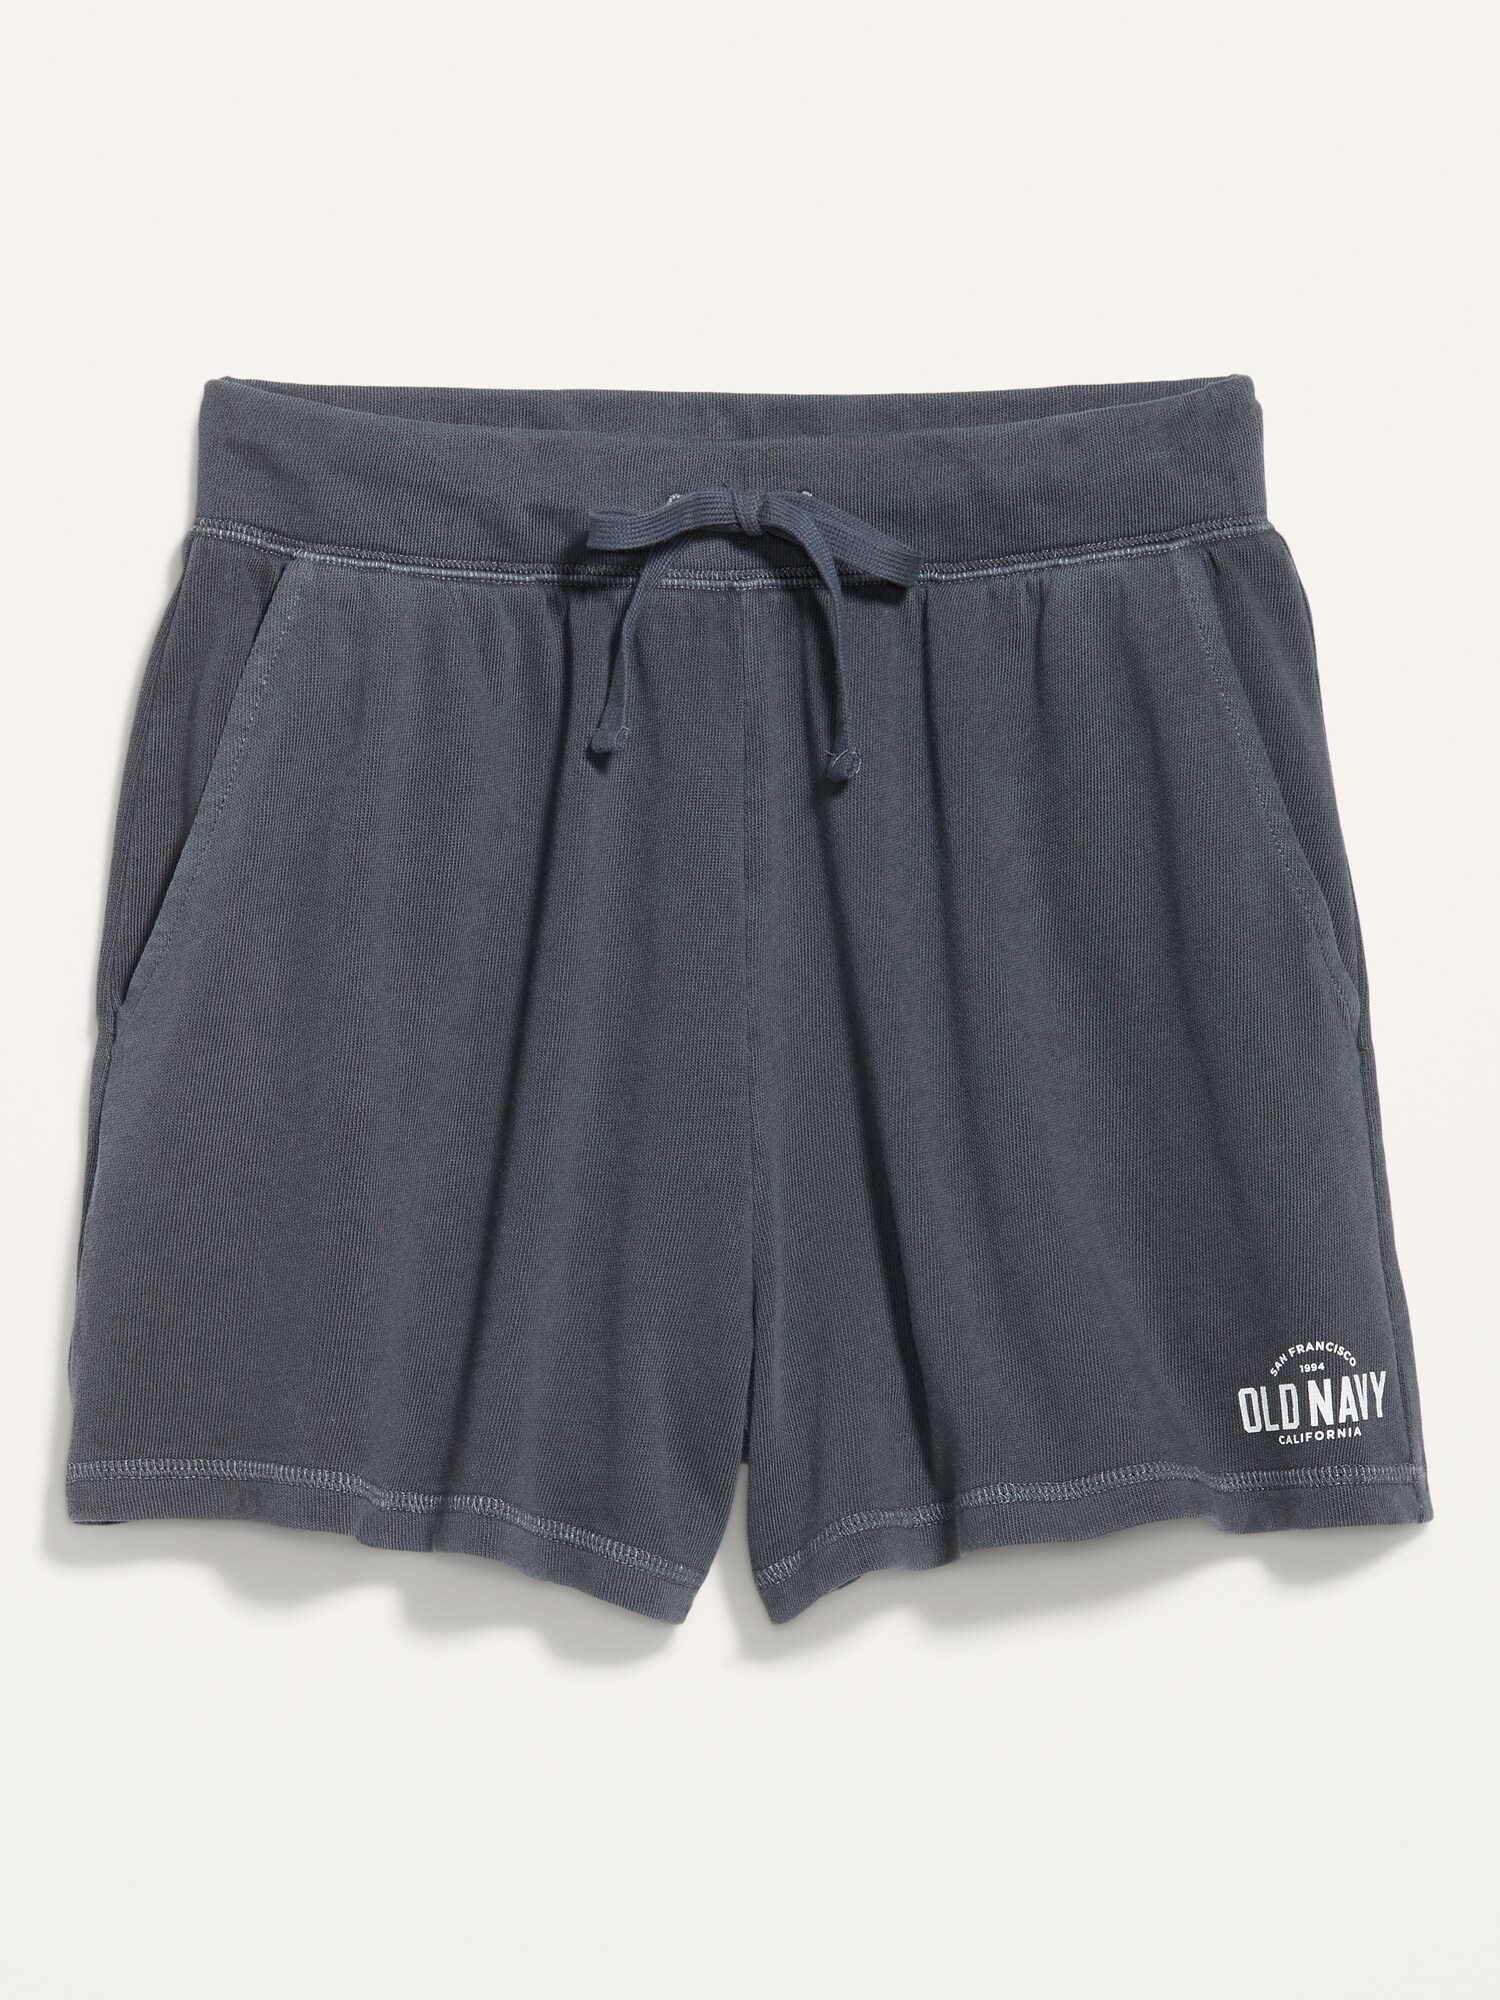 Vintage Gap Boxer/Pajama Shorts With Planet Design Boys Size S 5/6